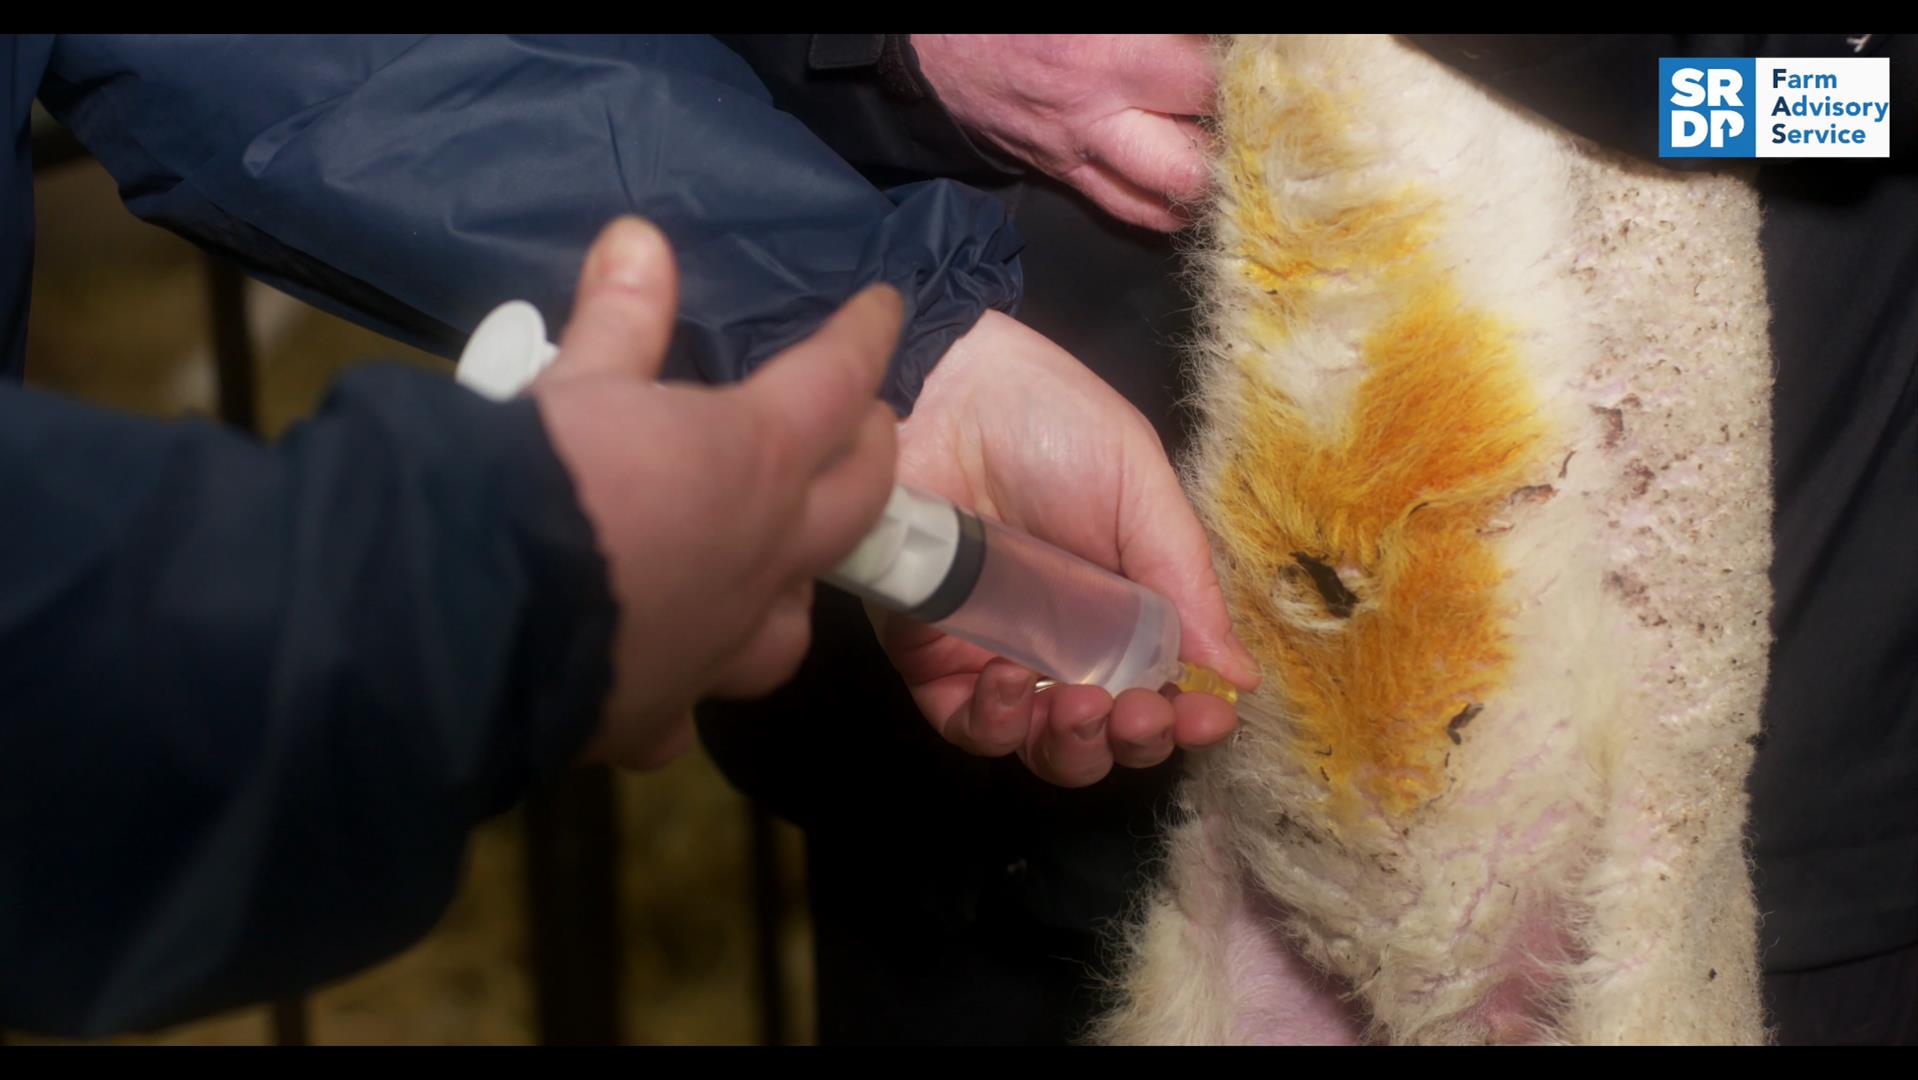 Treating hypothermia in newborn lambs | Helping farmers in Scotland